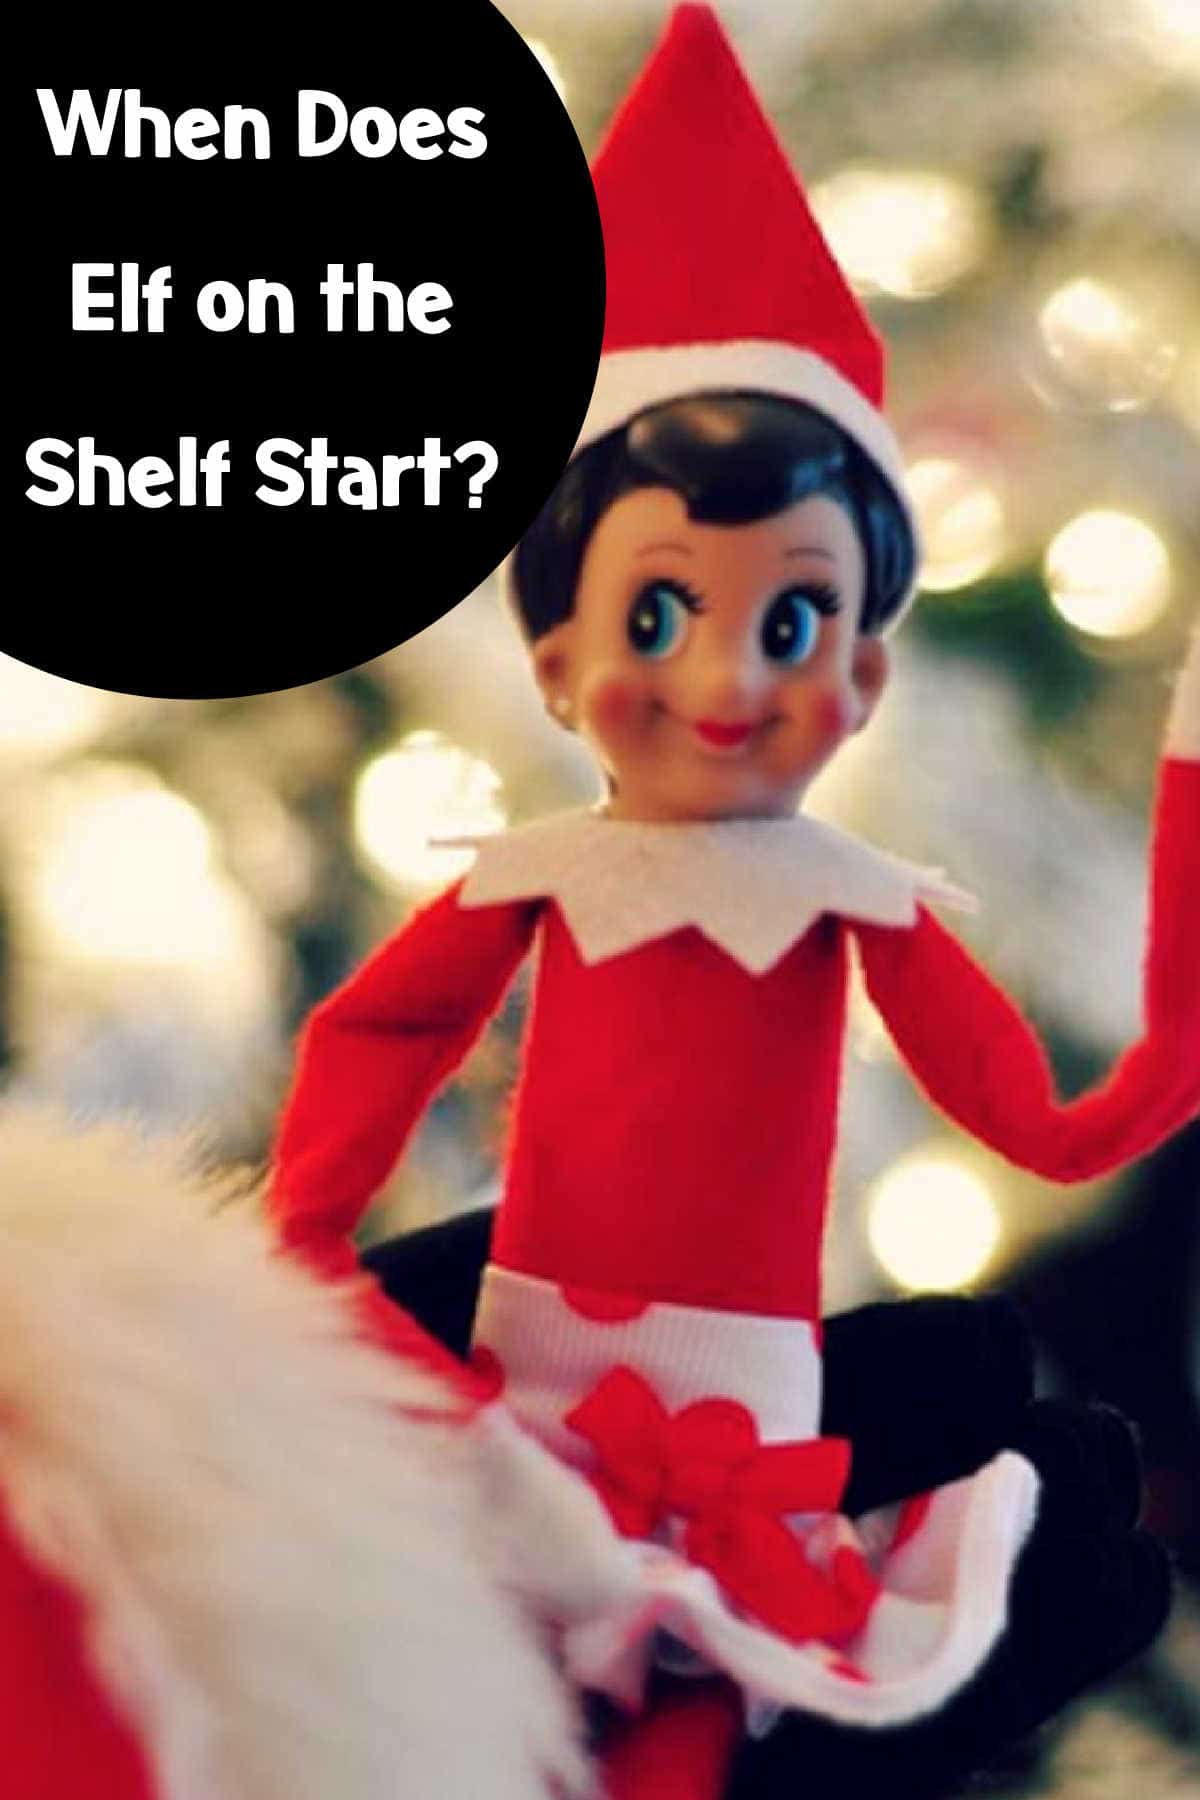 We Are Back Elf on the Shelf Letters • MidgetMomma